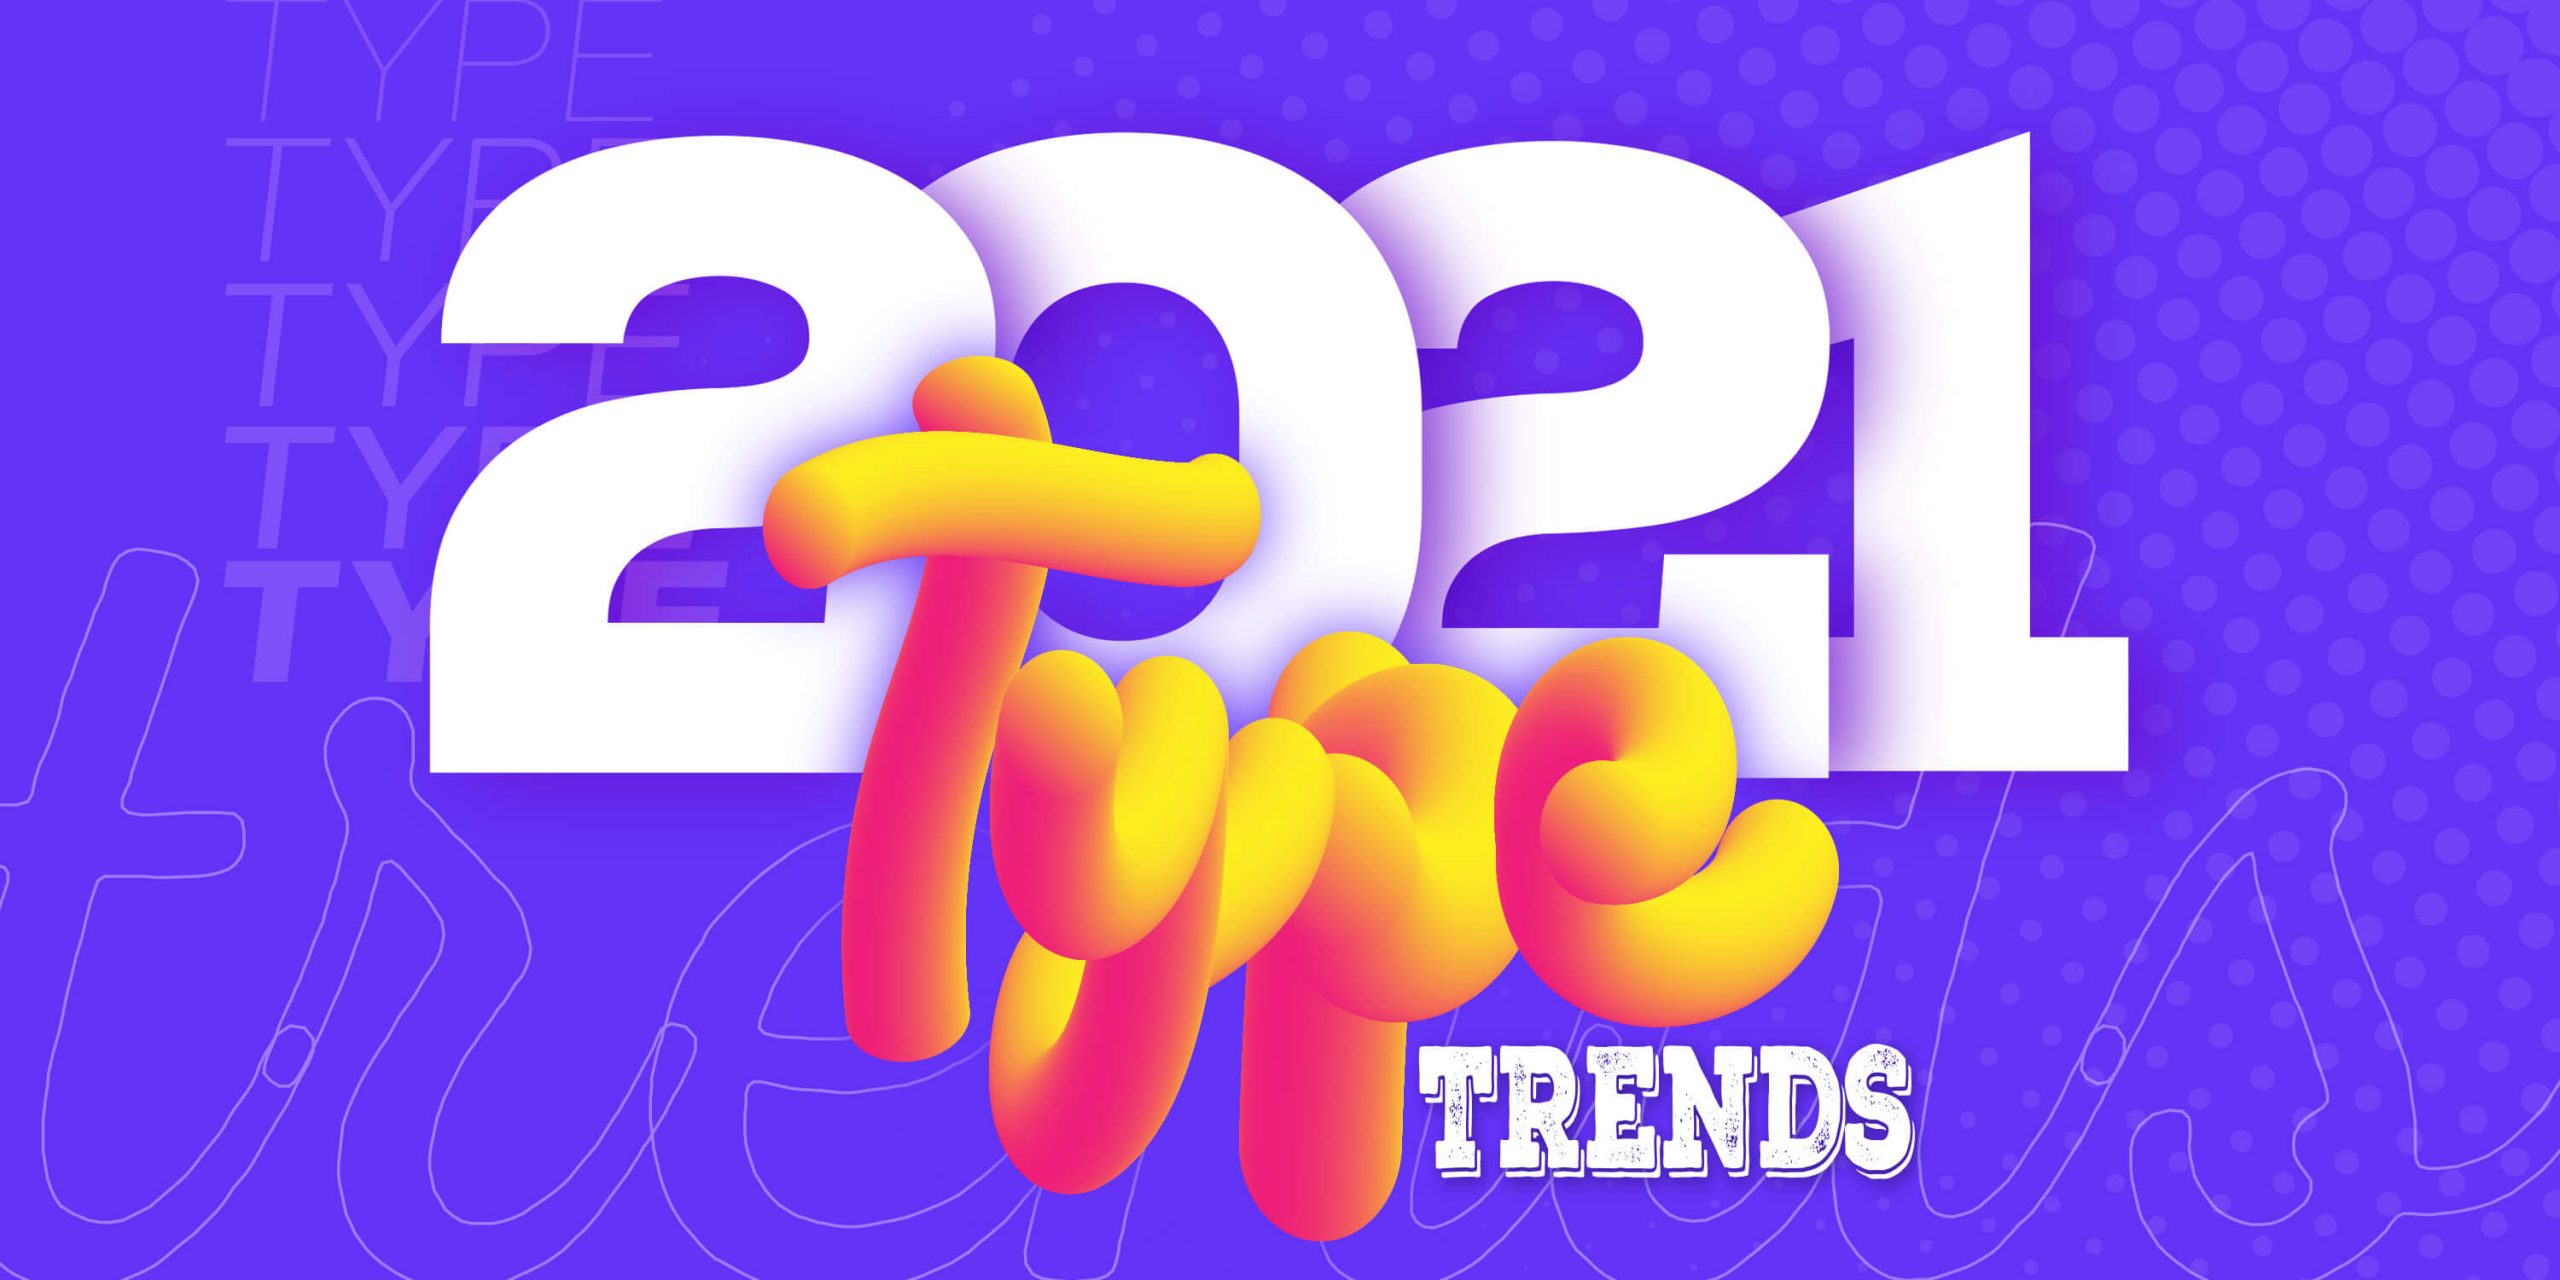 Typography Trends 2021 image